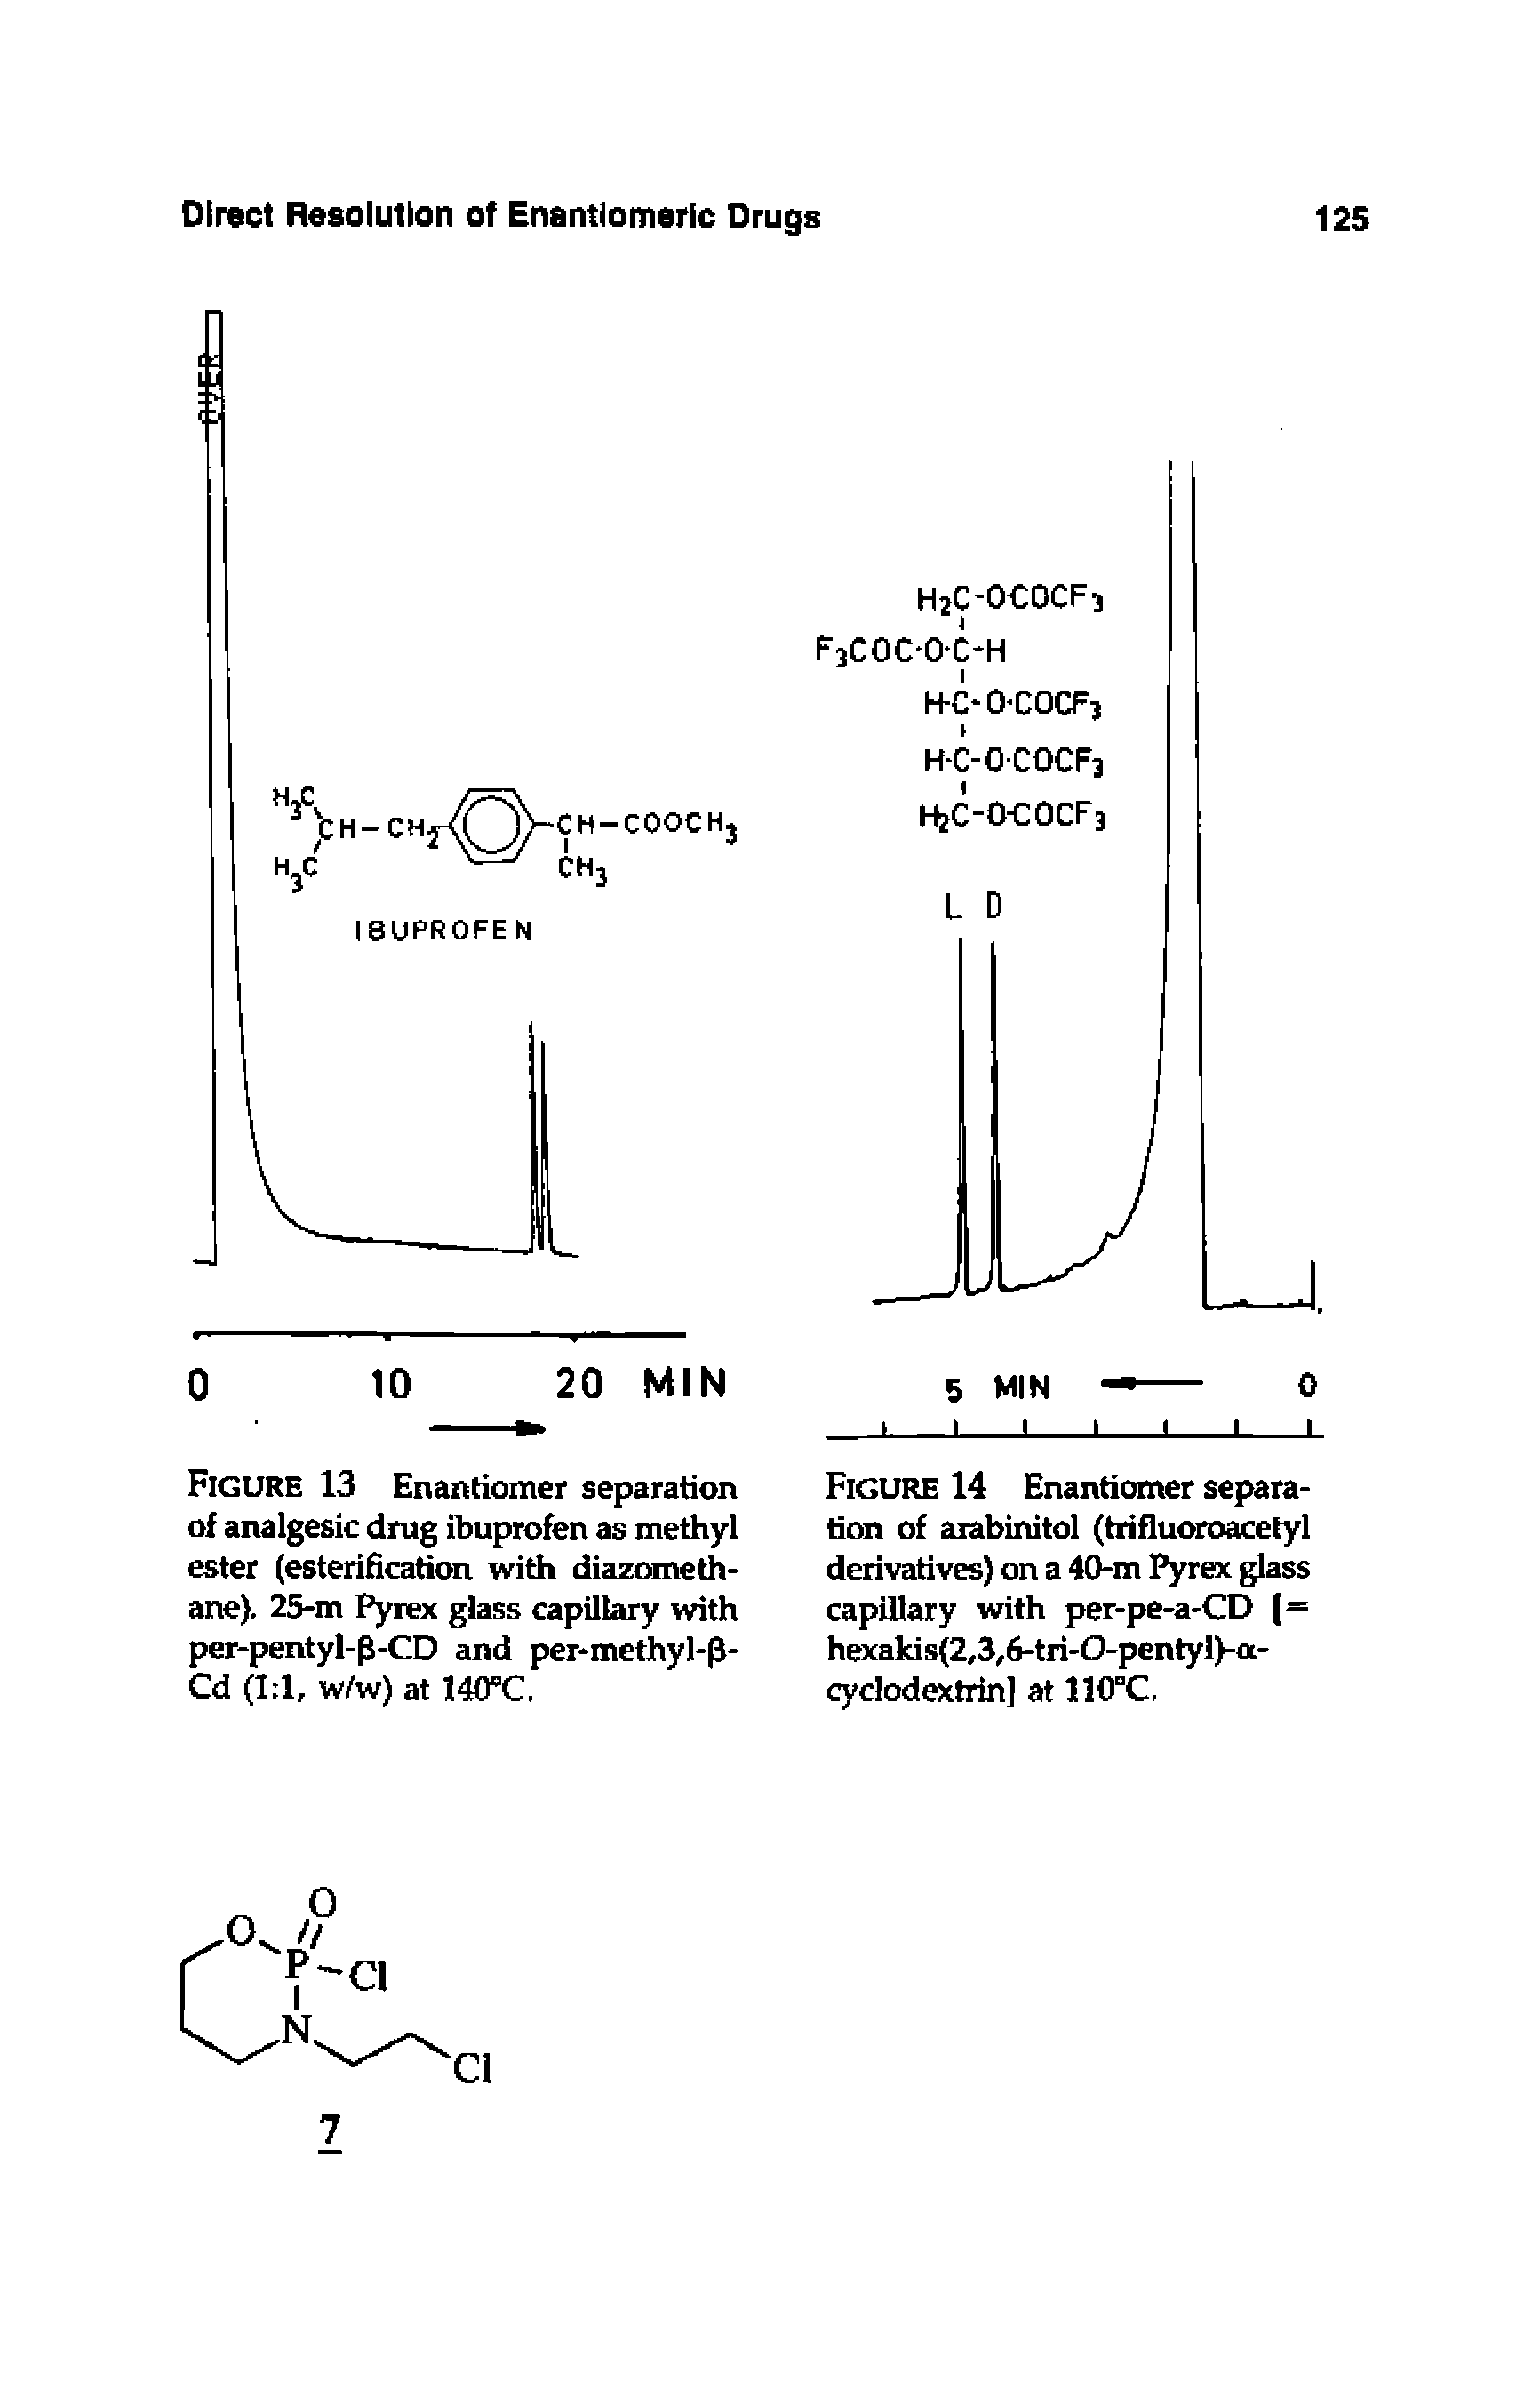 Figure 13 Enantiomer separation of analgesic drug ibuprofen as methyl ester (esterification with diazometh-ane). 25-m Pyrex glass capillary with per-pentyl-p-CD and per-methyl-p-Cd (1 1, w/w) at 140 C,...